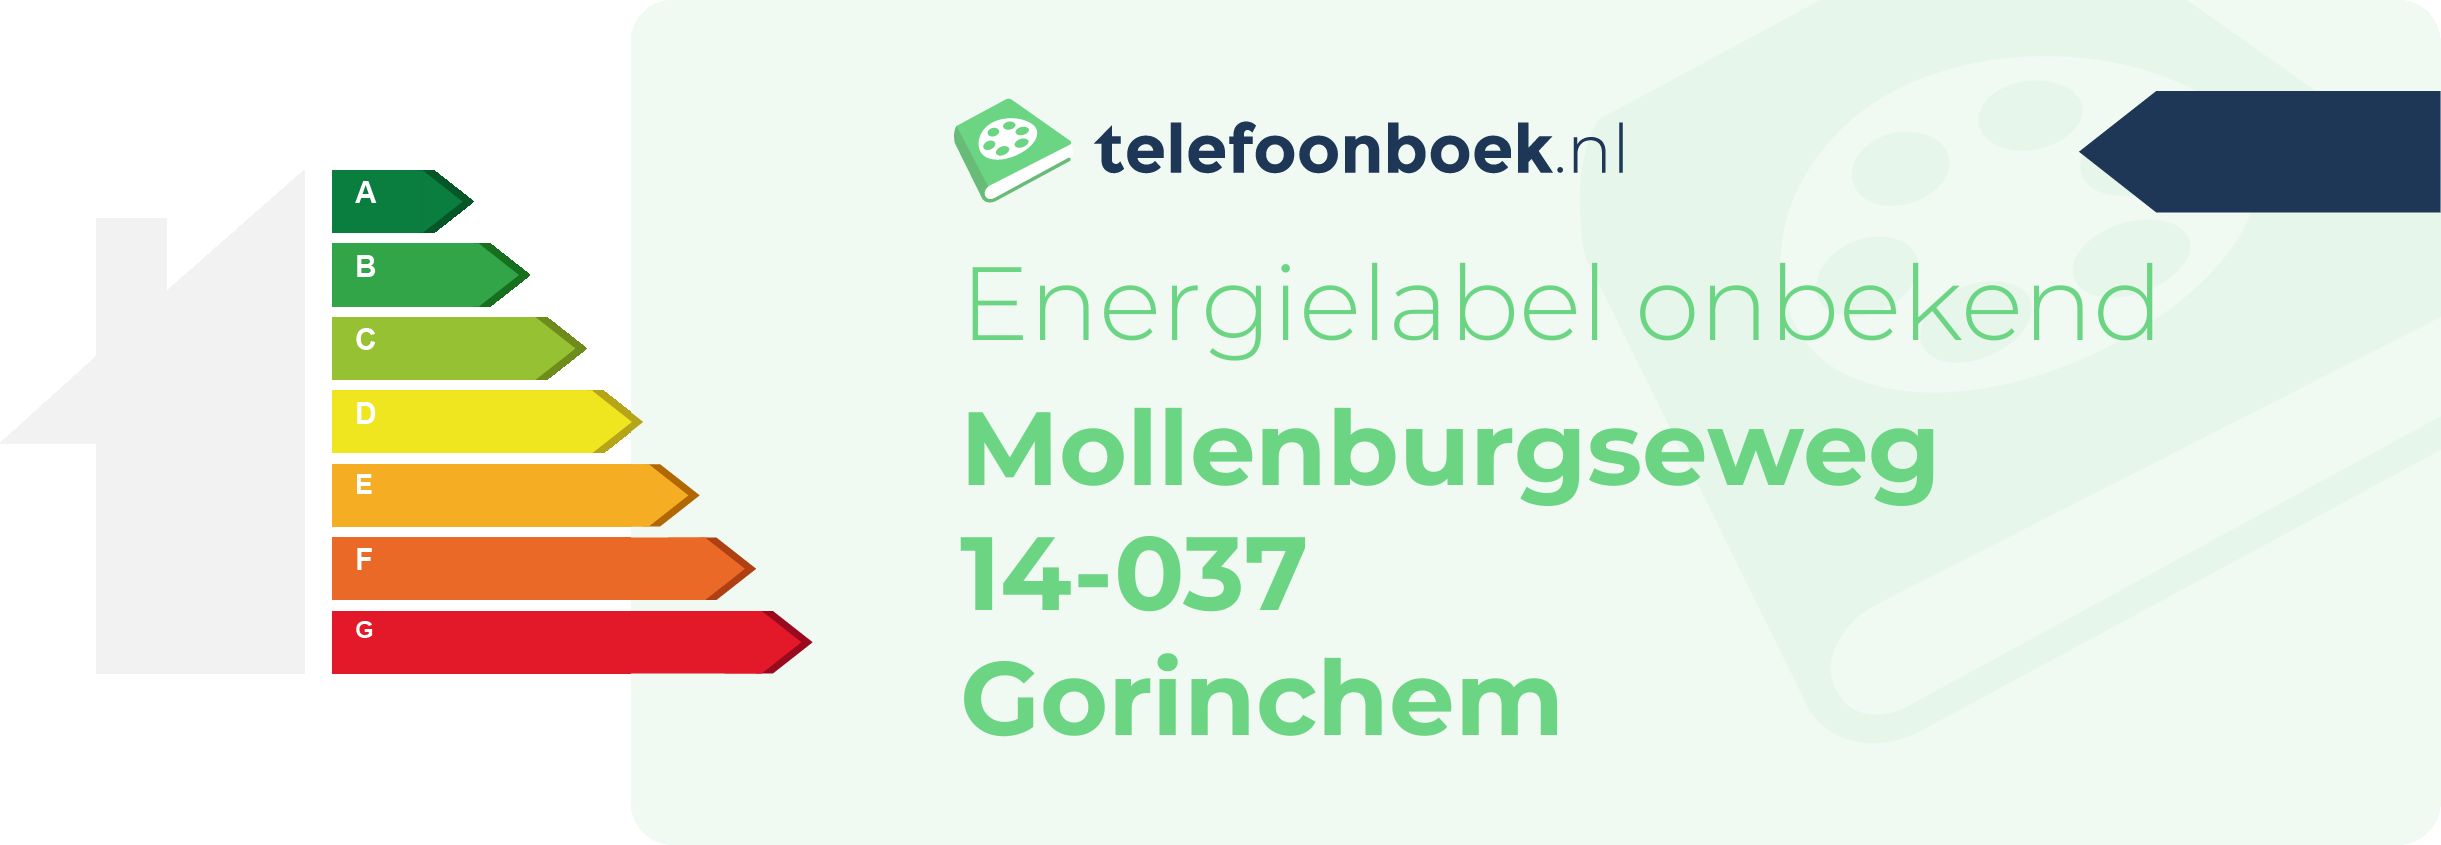 Energielabel Mollenburgseweg 14-037 Gorinchem